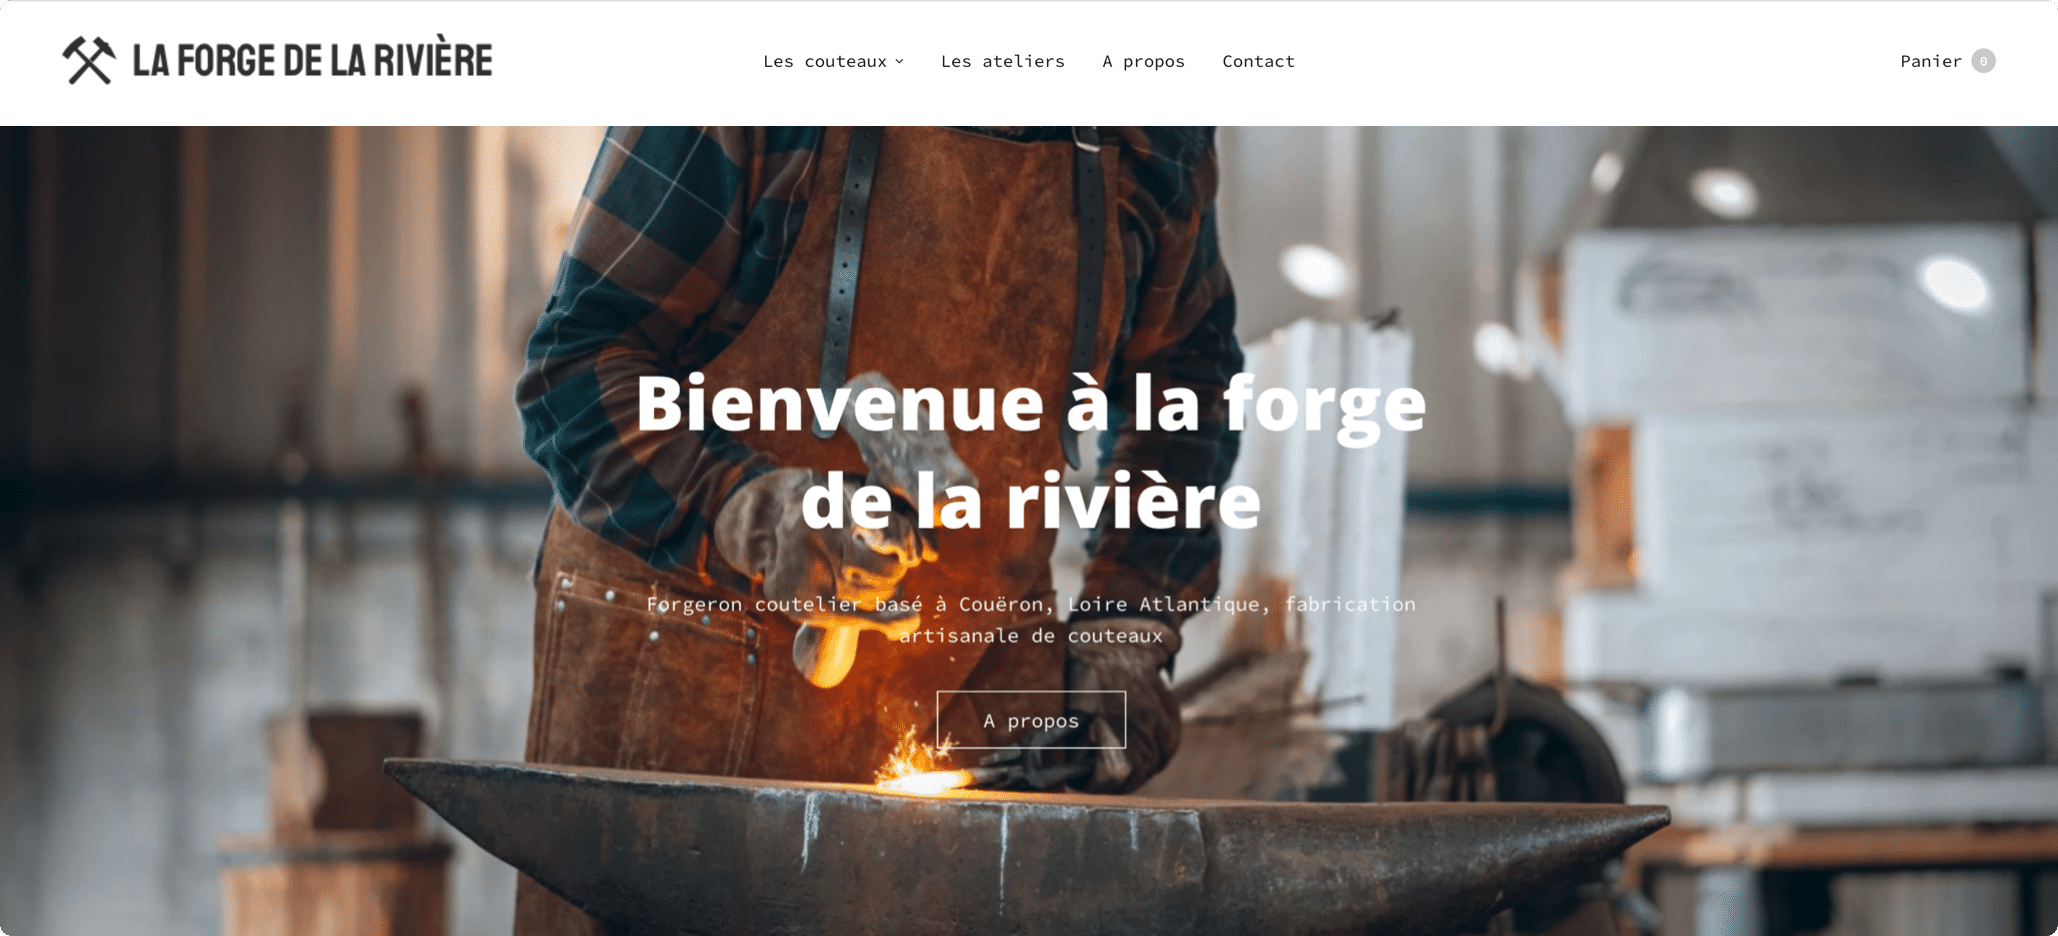 La-Forge-de-la-riviere-forge-direction-artistique-webdesign-portfolio-design-studio-graphique-11